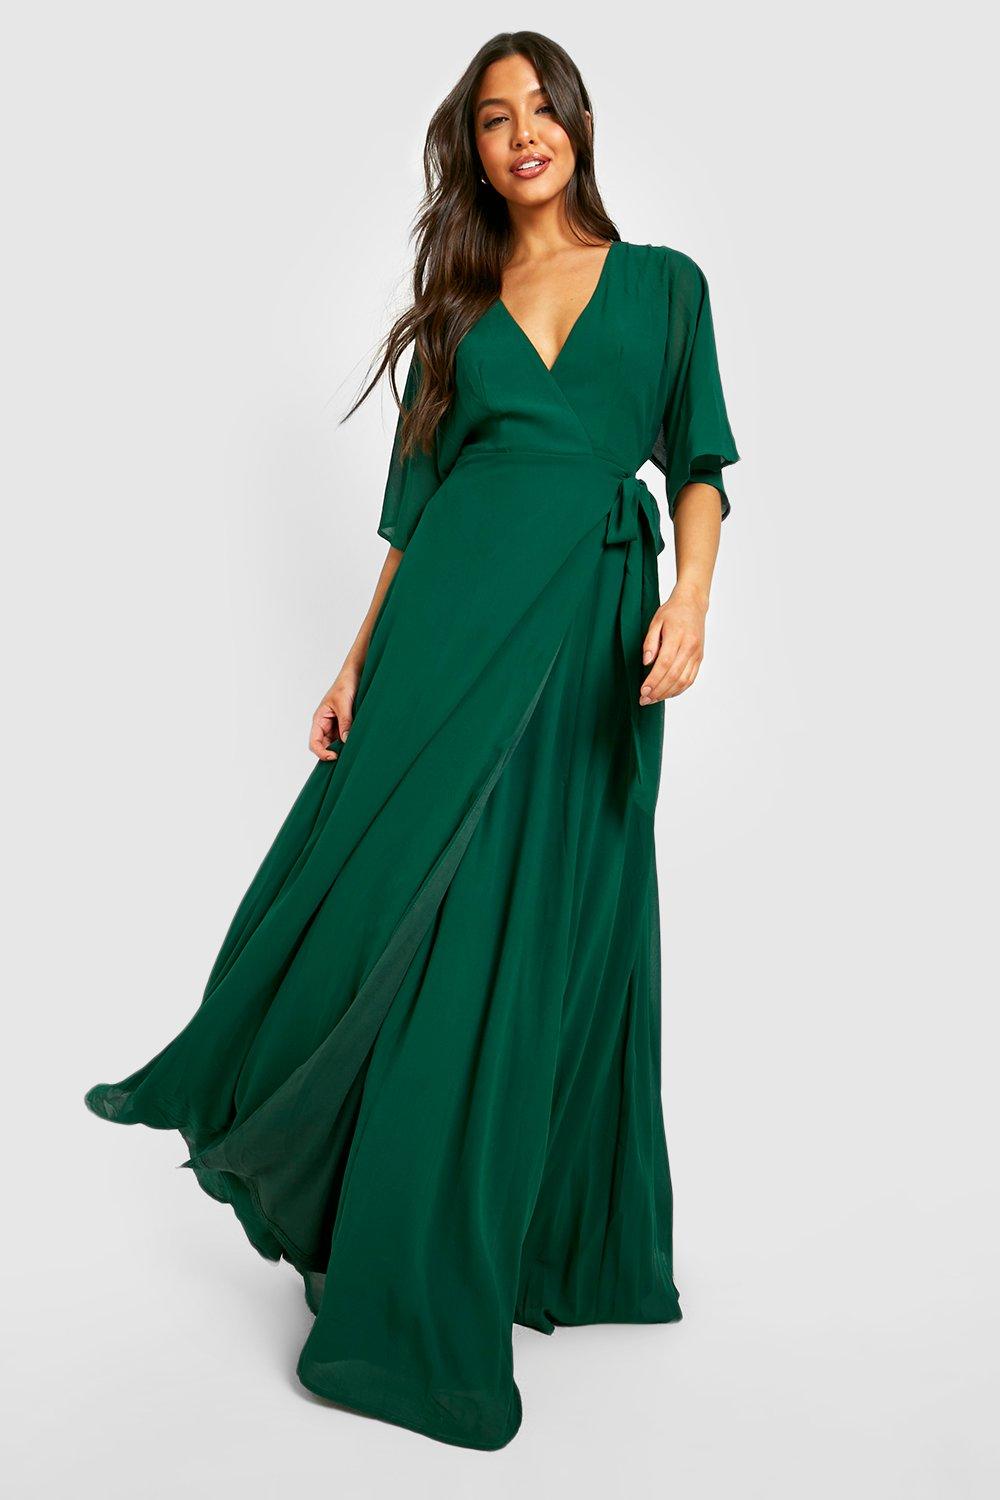 Starry Nights Dress - Emerald - Buy Women's Dresses - Billy J